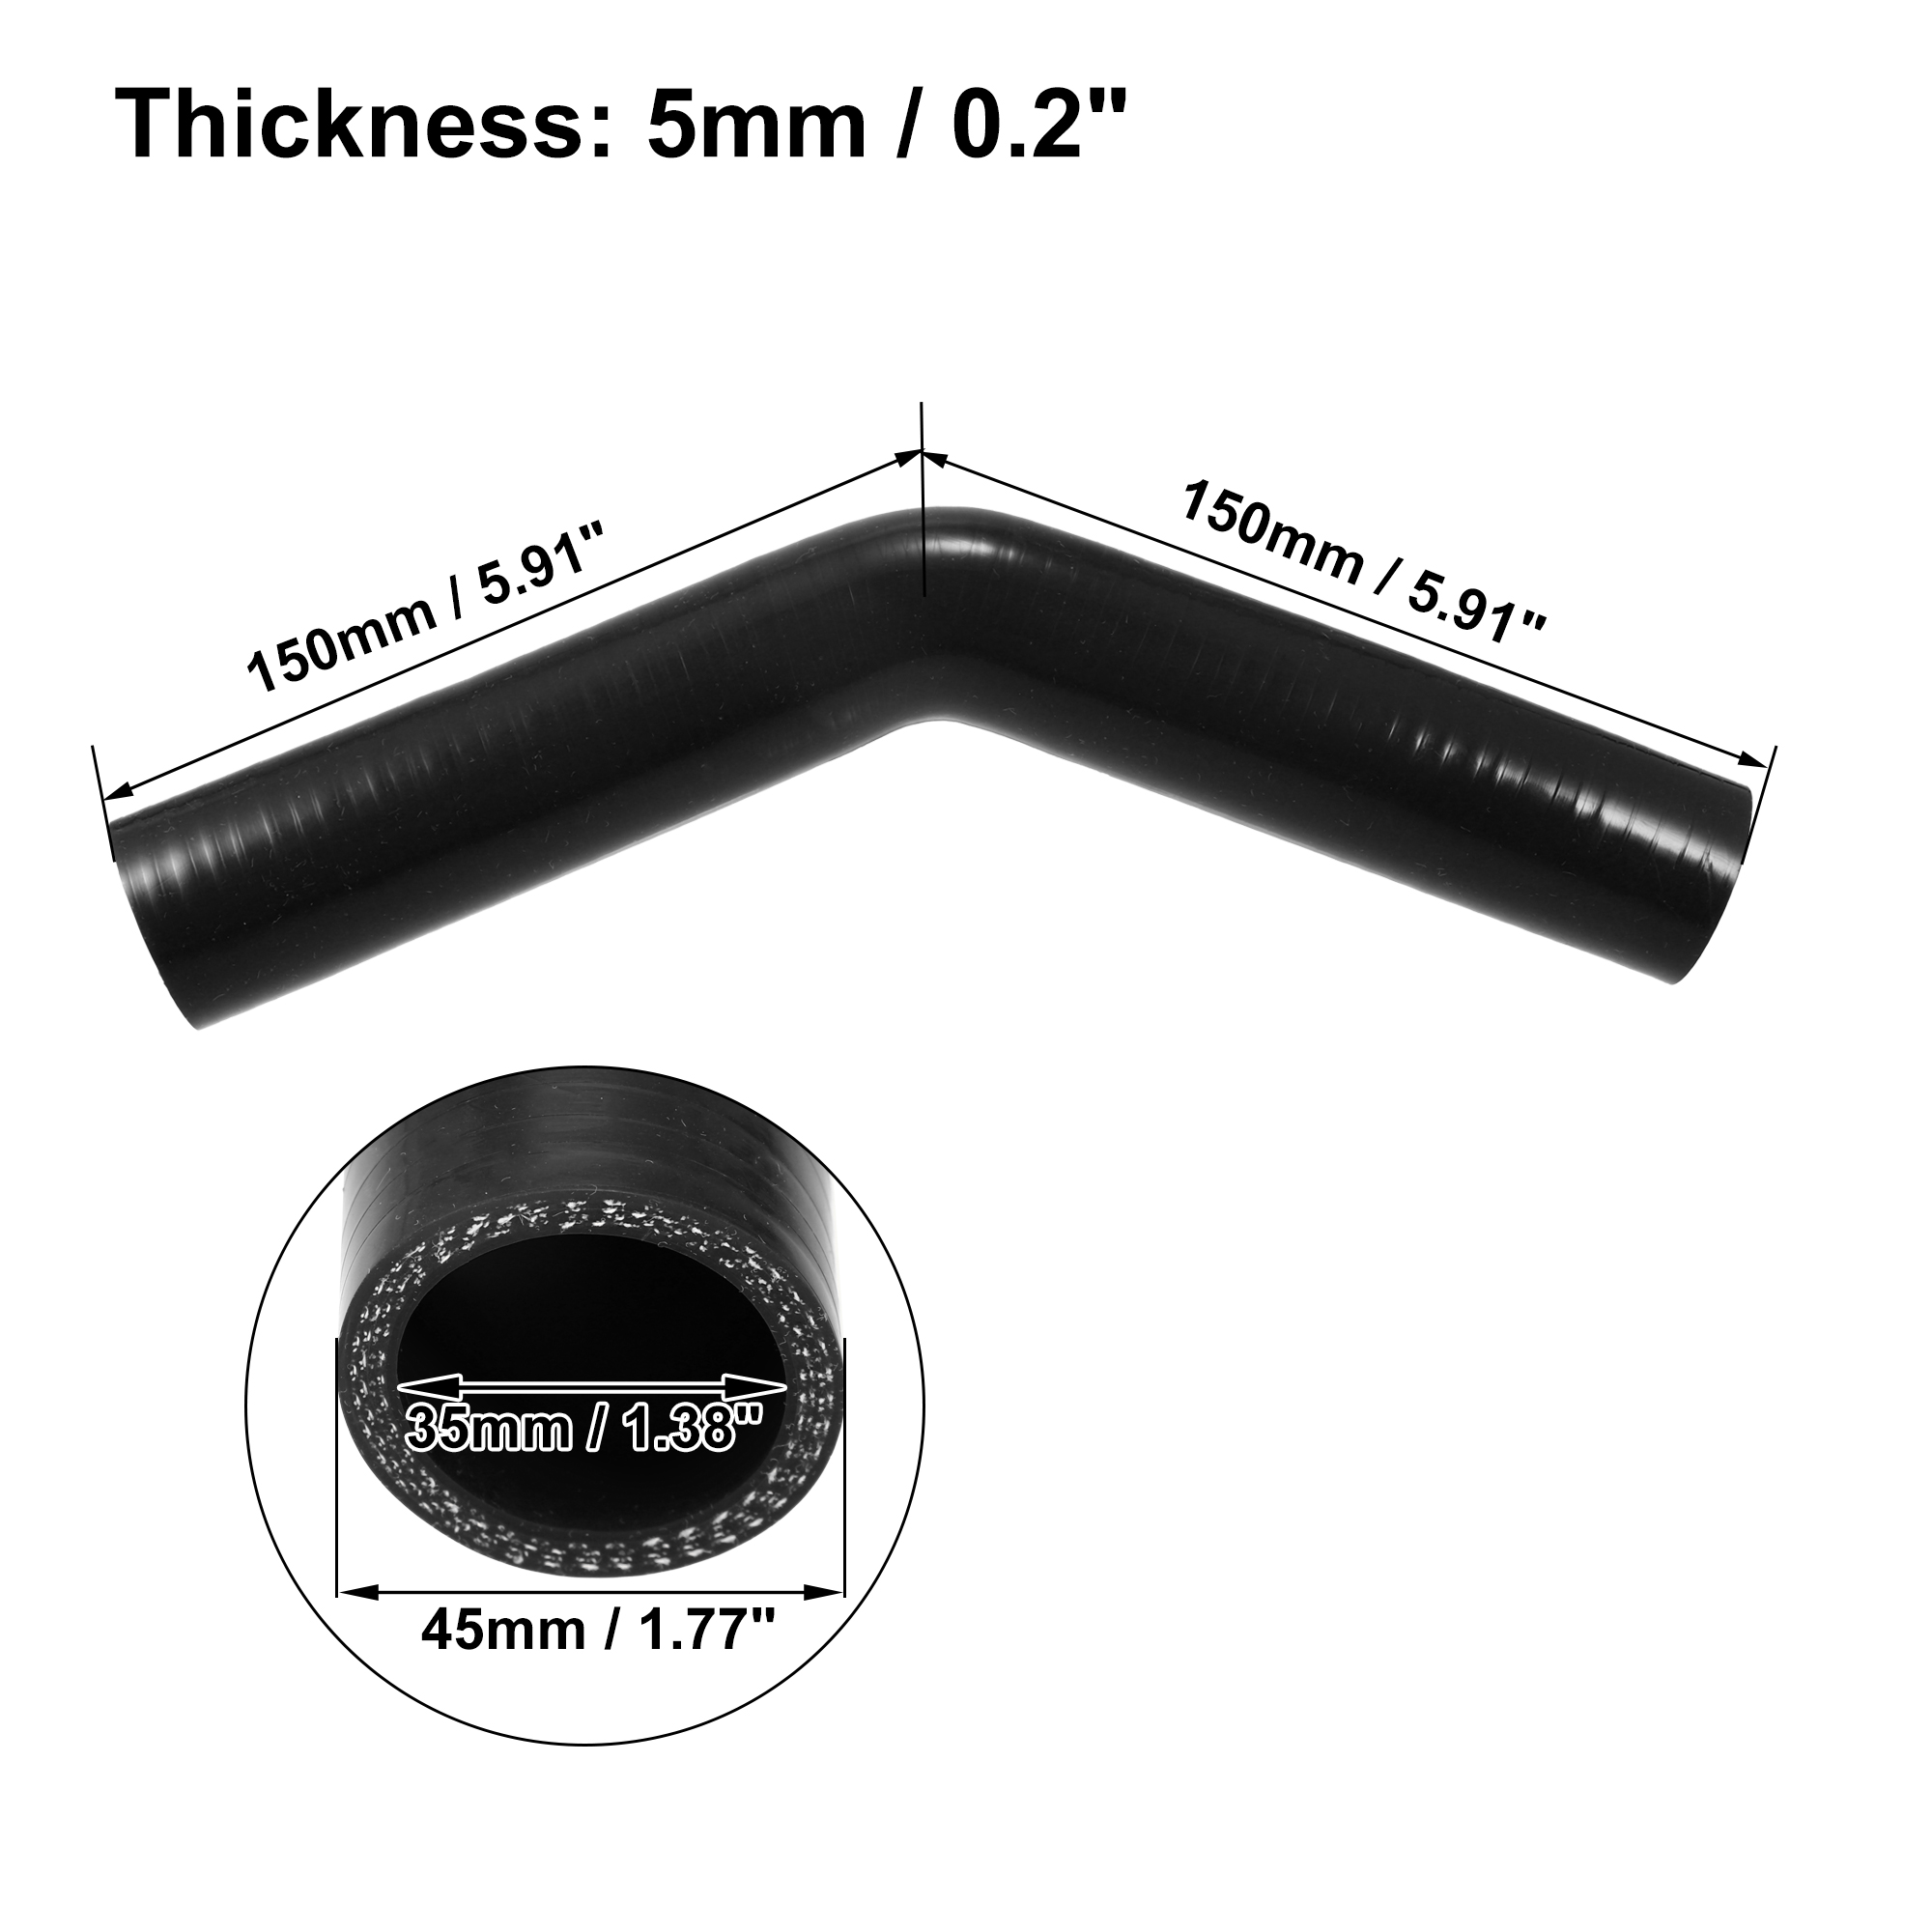 Unique Bargains 35mm 1.38" 45 Degree Car Elbow Coupler Silicone Hose Intercooler Tube Black